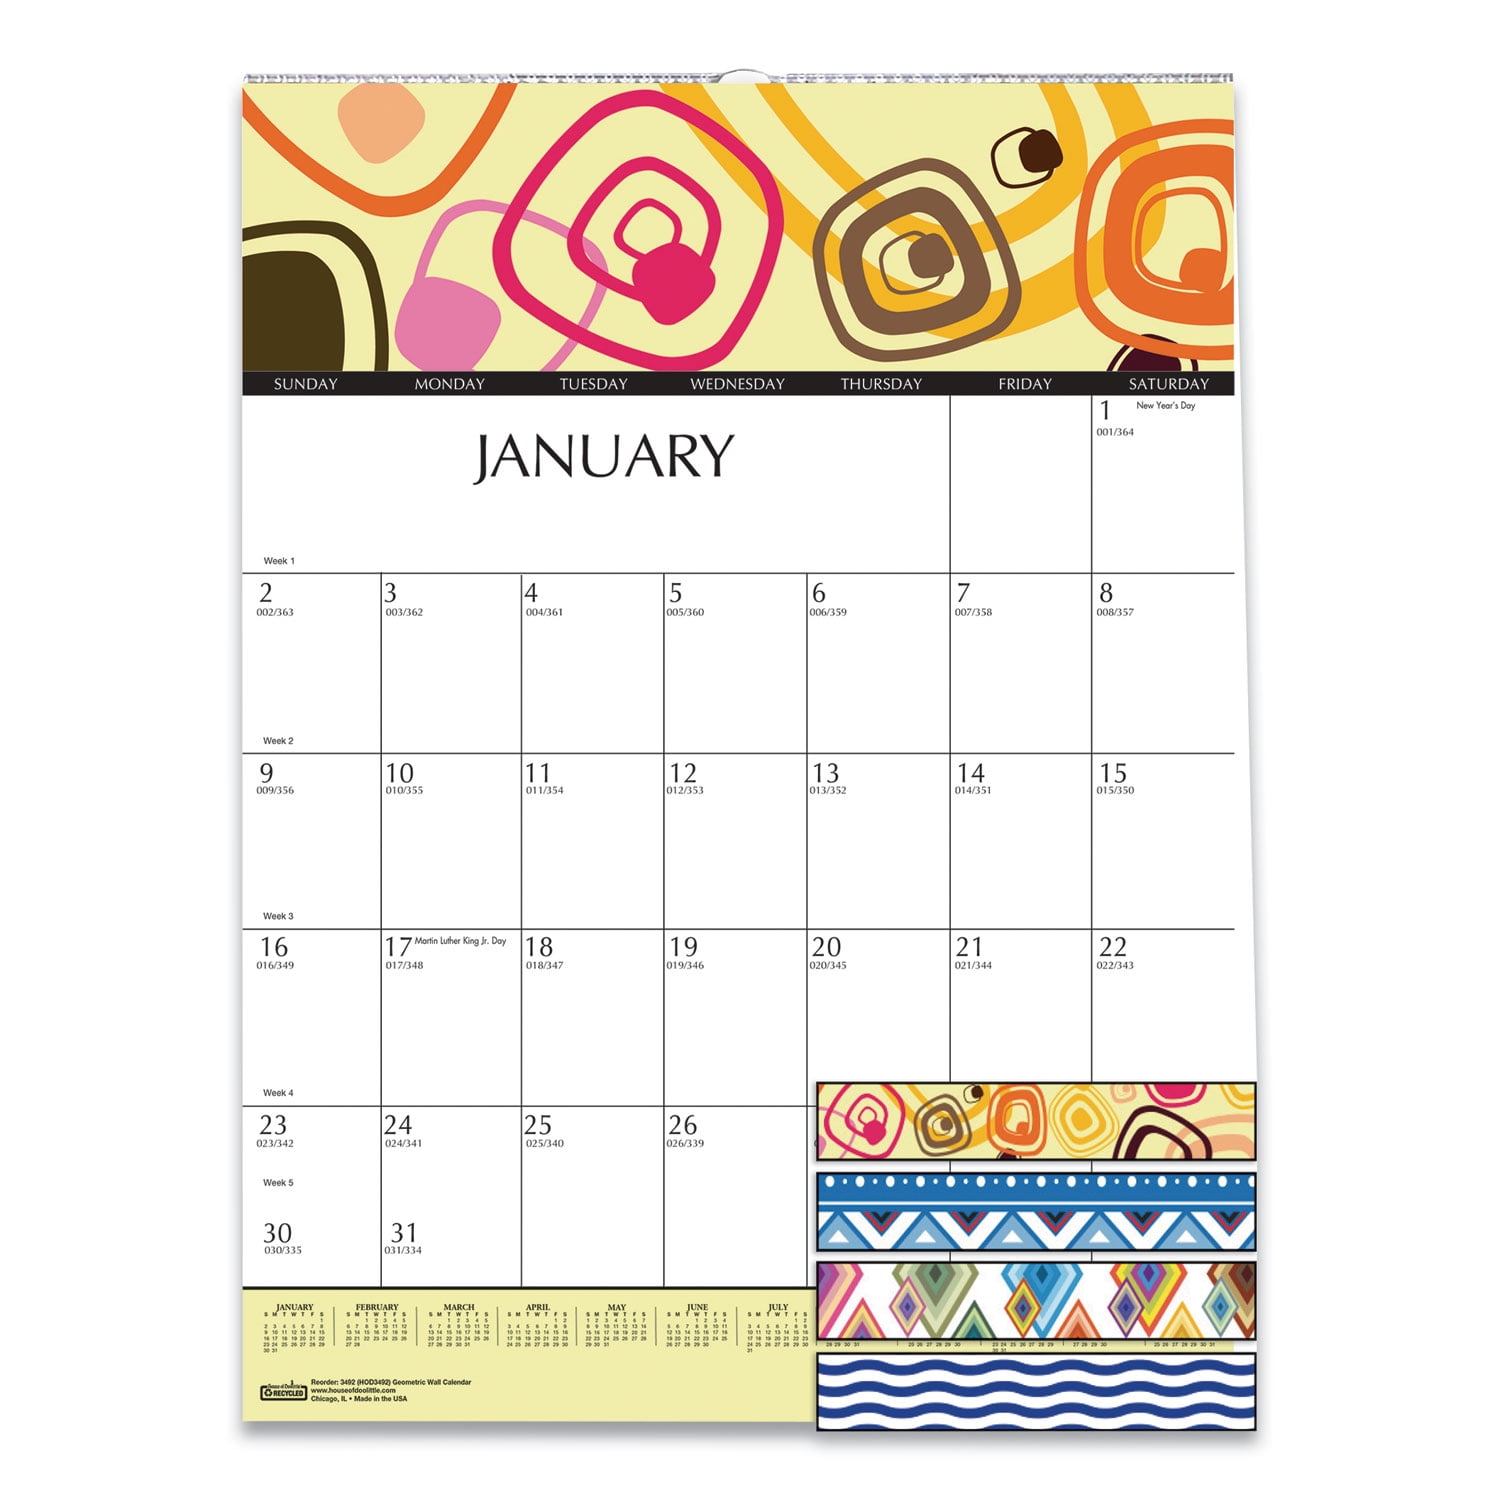 2022 Magnetic Refrigerator Calendar Wall Calendar Pad by Bright Day 16 Month 8 x 10 Inch Geometric